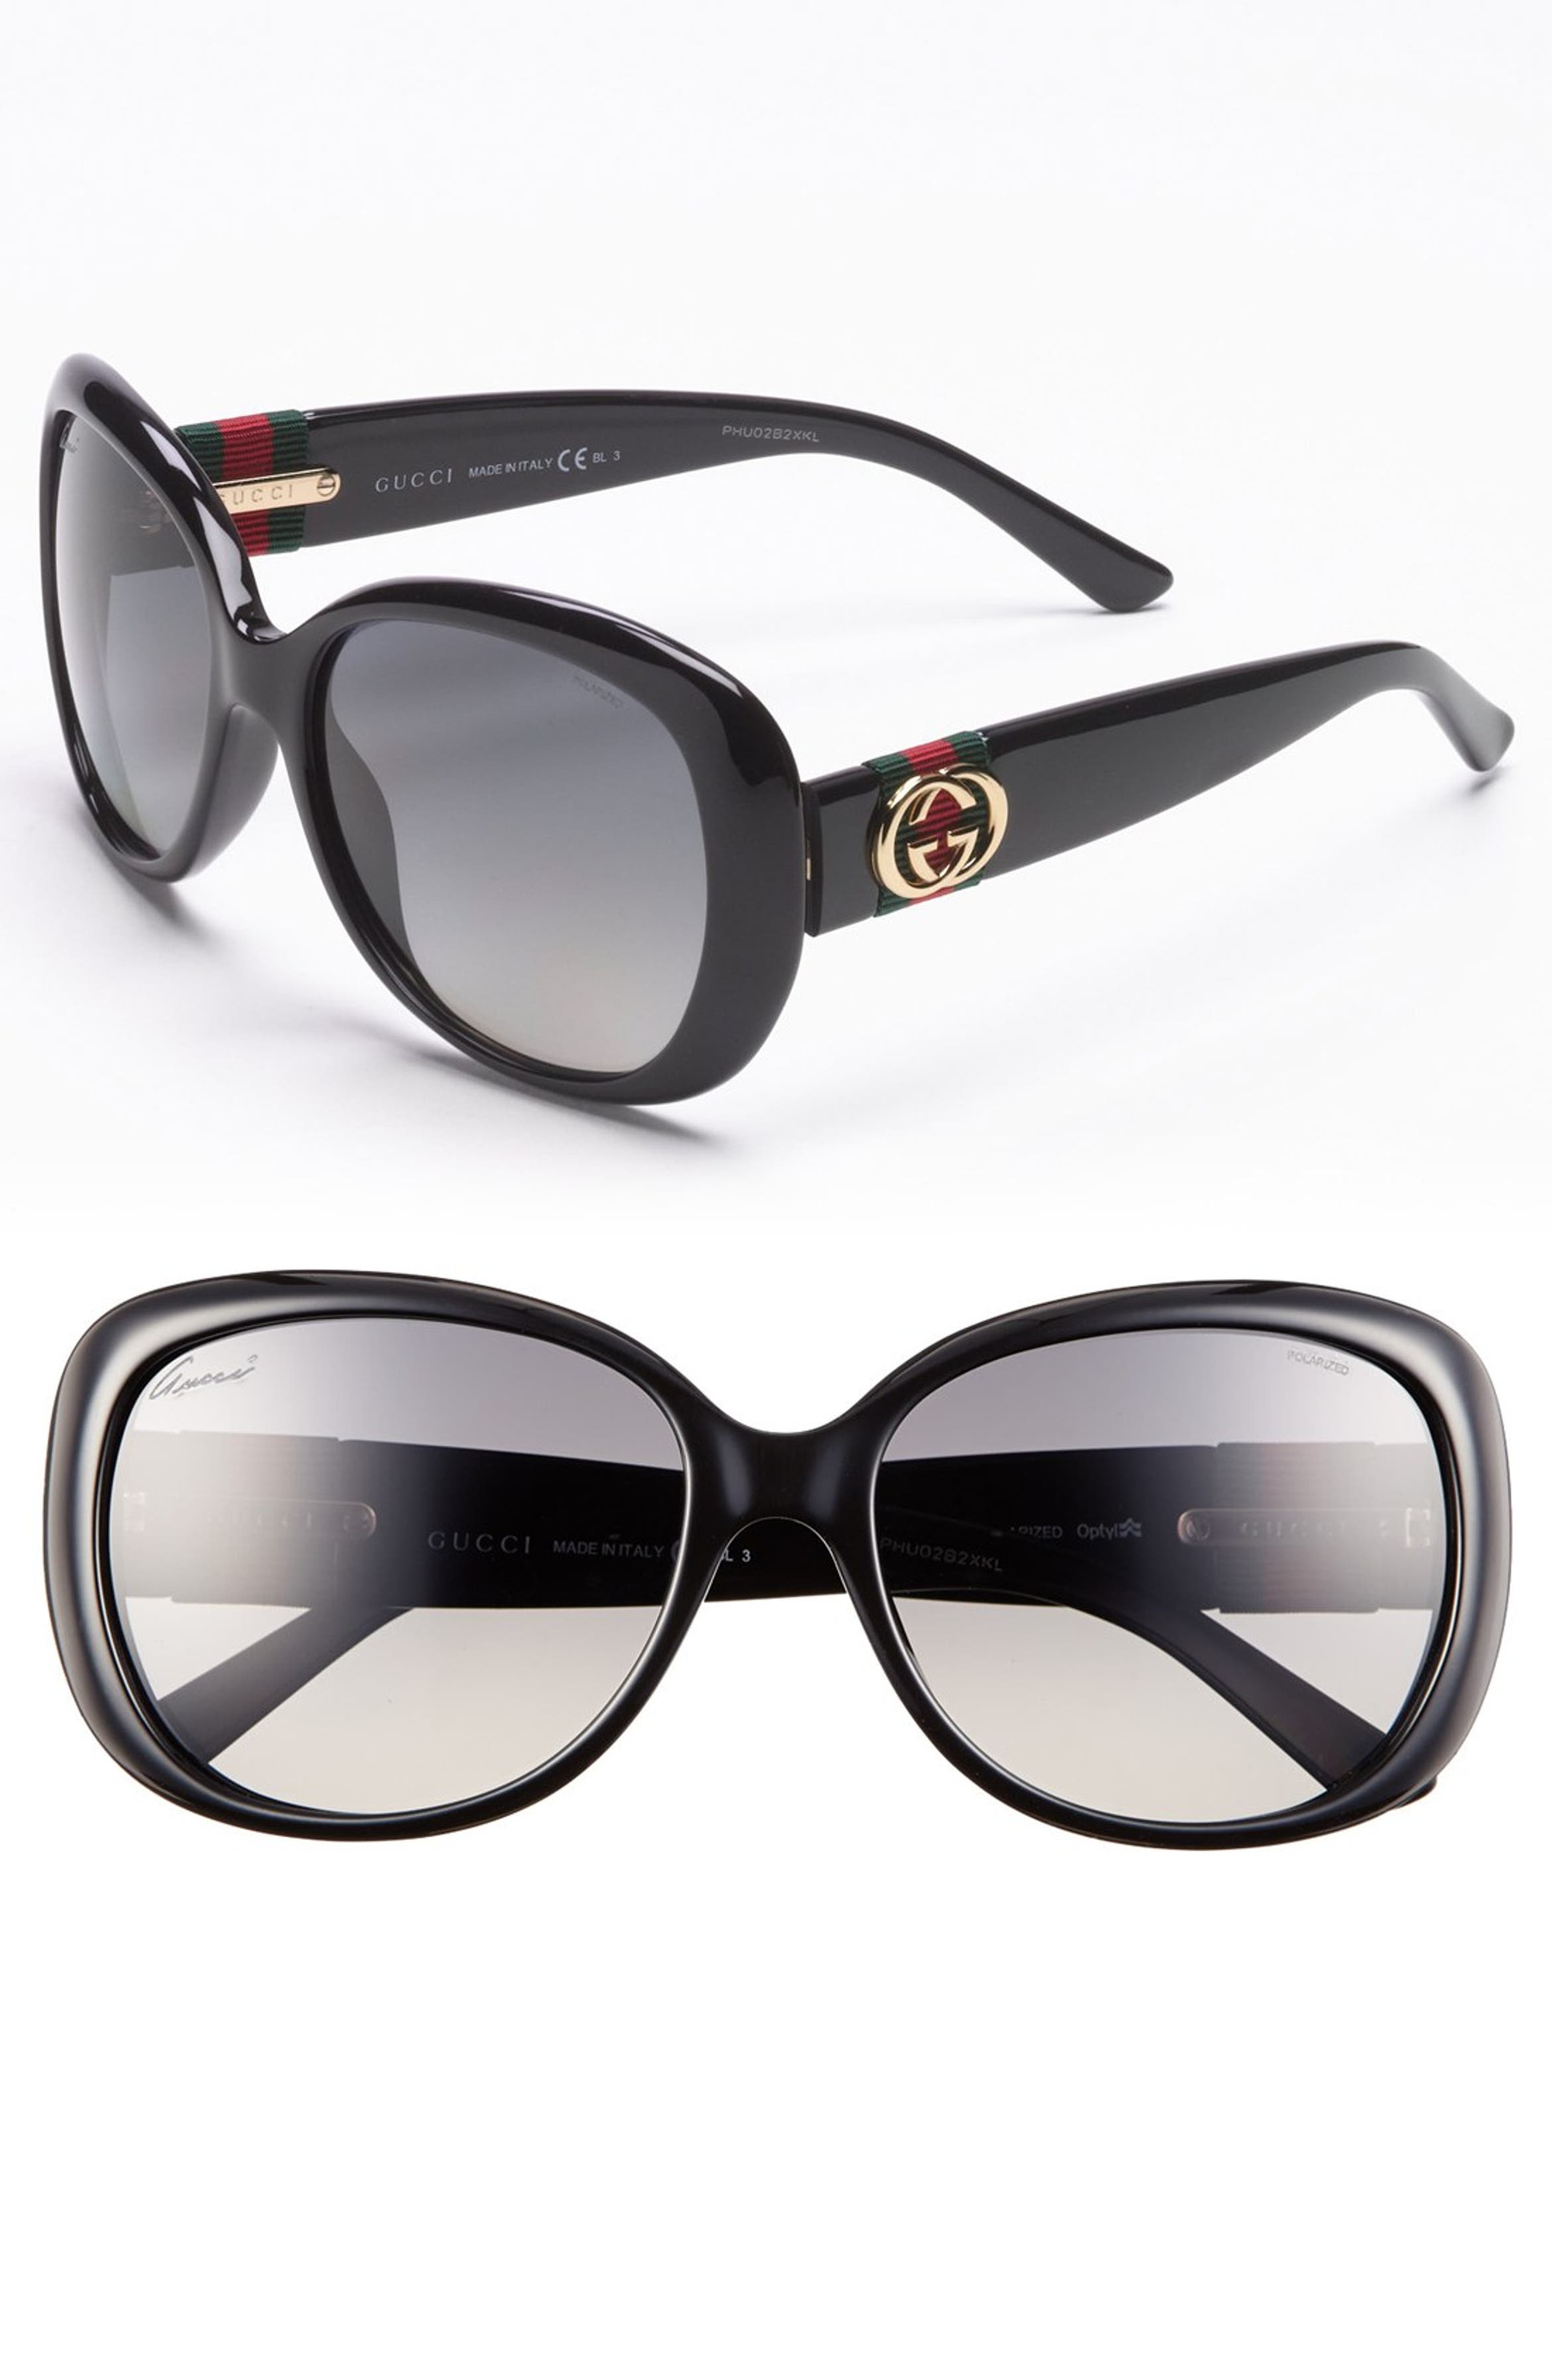 Gucci 56mm Polarized Sunglasses Nordstrom